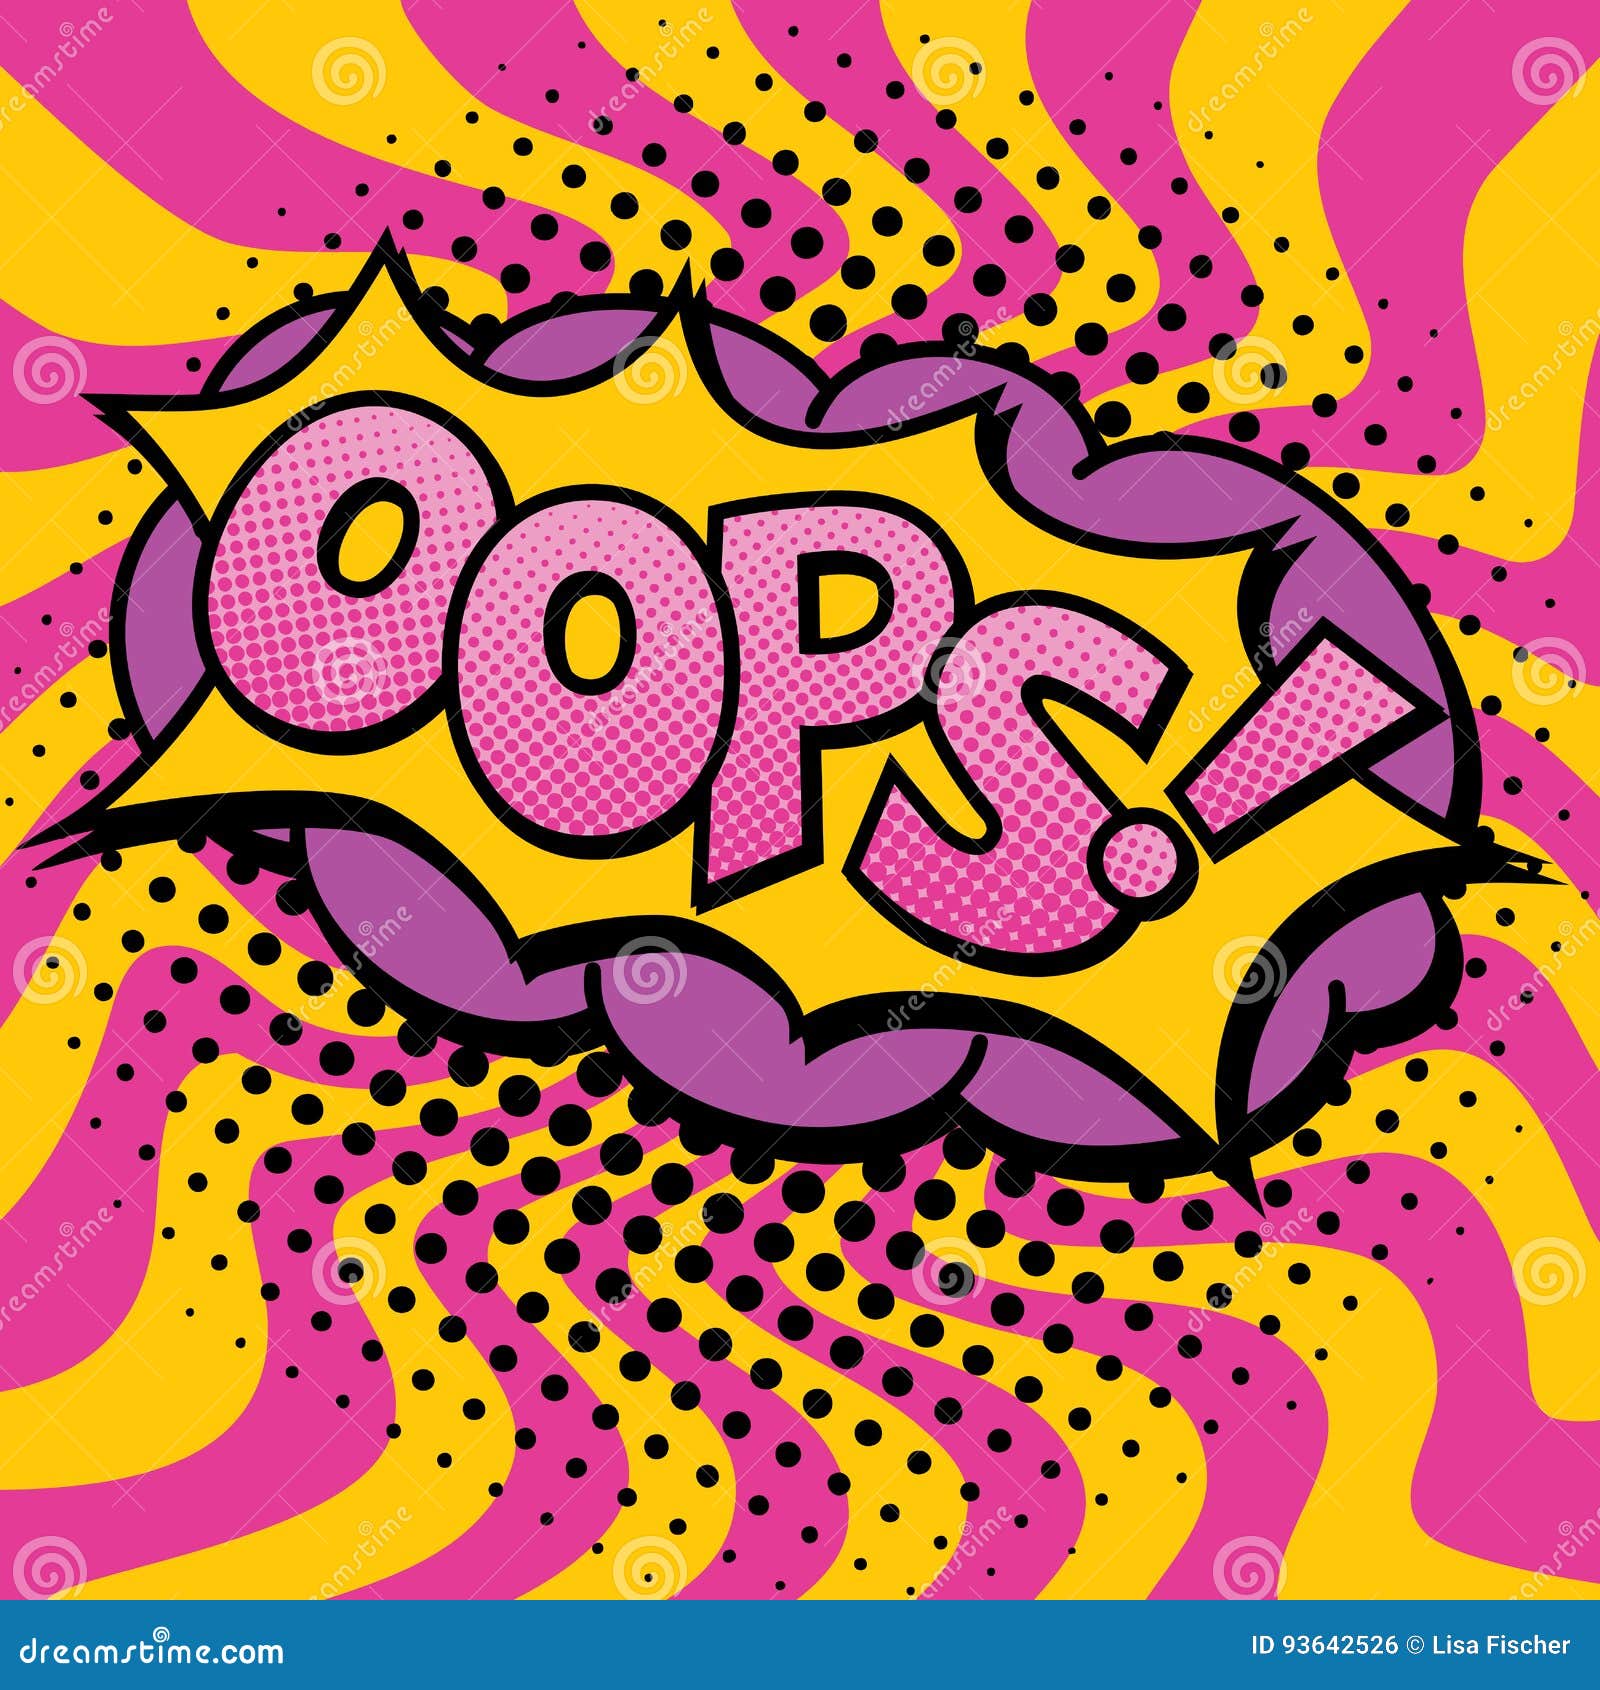  Pop  Art  OOPS Text  Design  stock vector Illustration of 